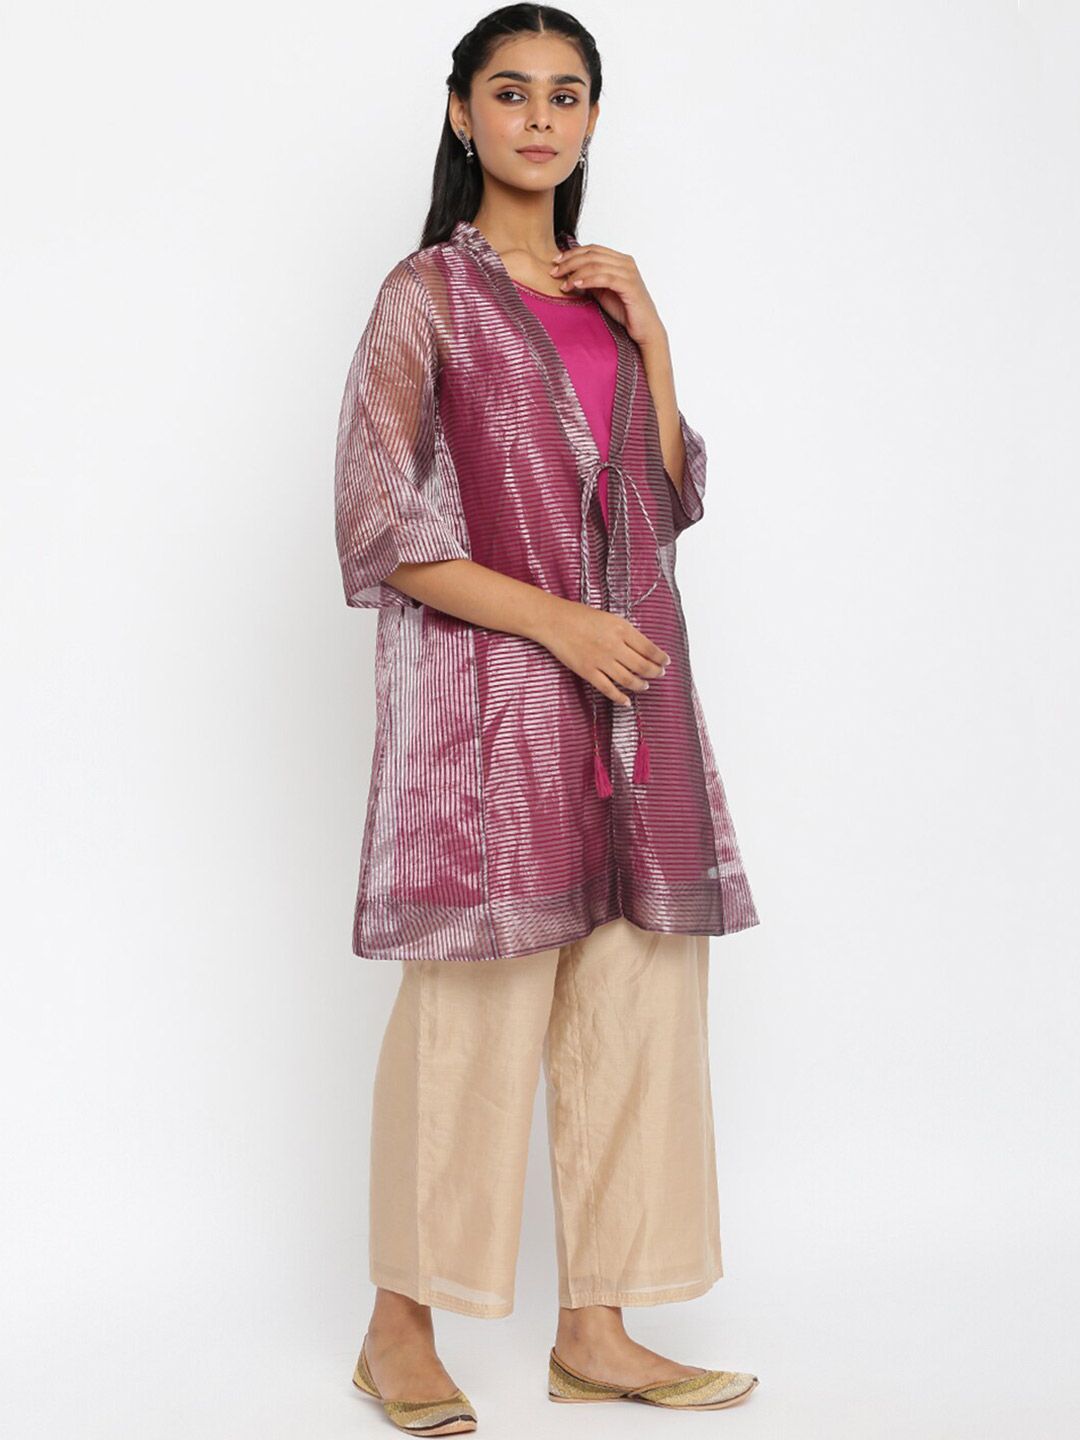 Fabindia Pink Silk Tunic With Jacket Price in India